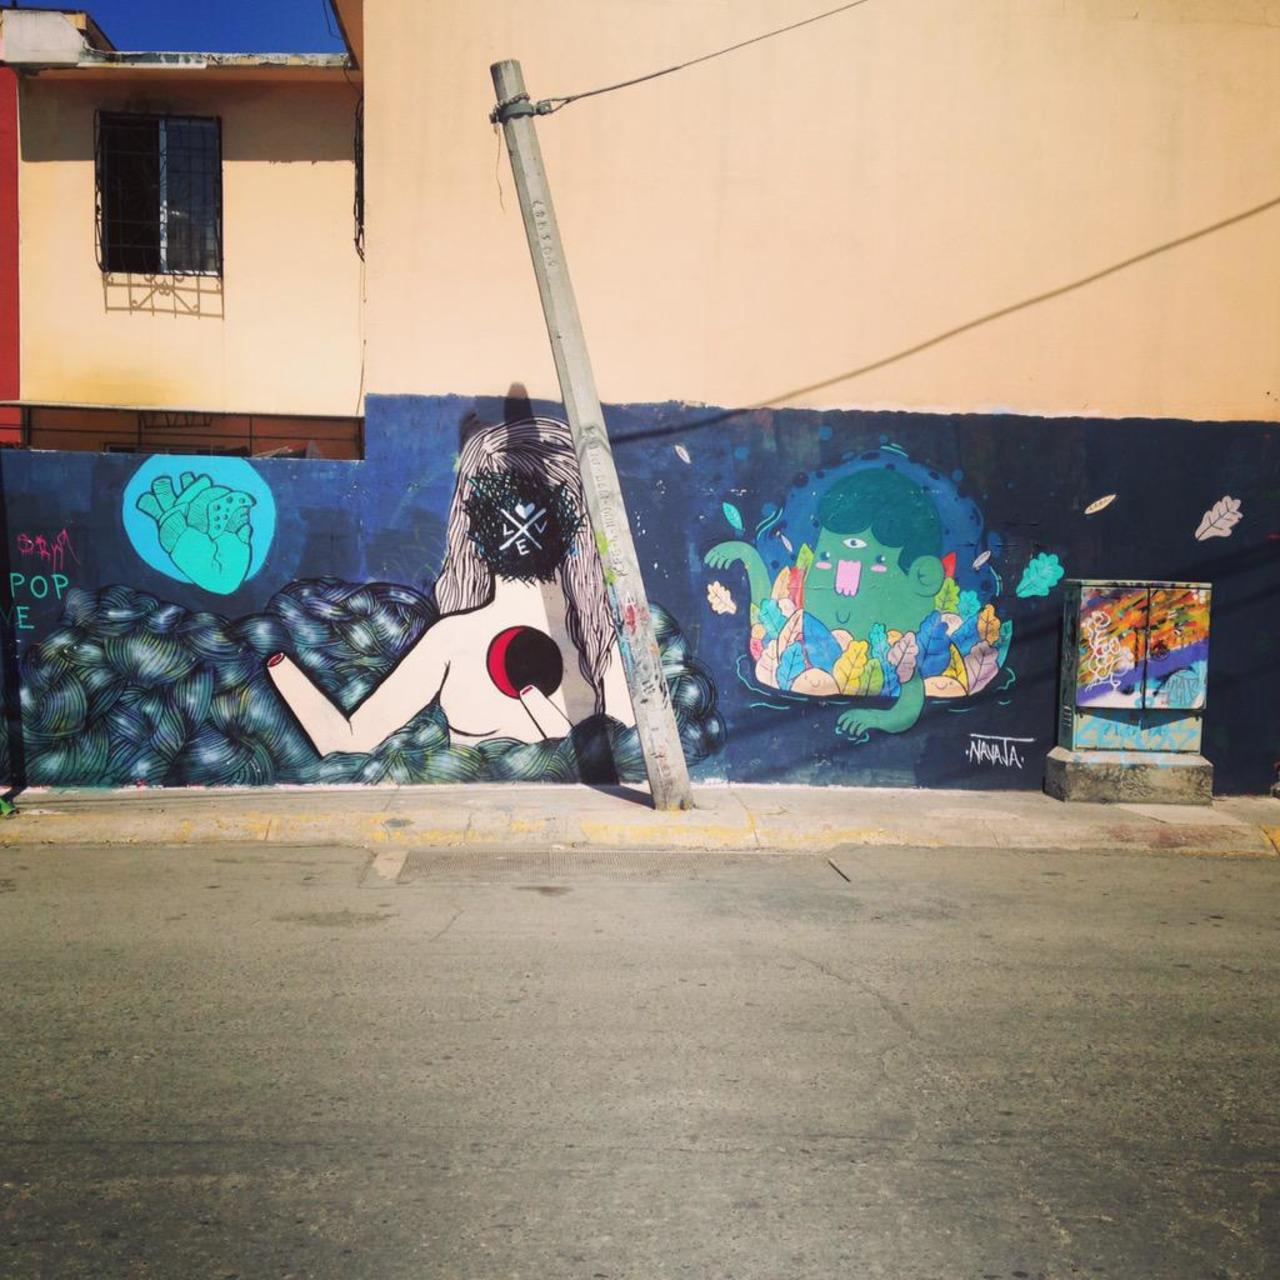 [Los peligros de la ceguera...]
#Graffiti #StreetArt #ArtDeRue #ArteUrbano https://instagram.com/p/8zD9Eqh5k7/ http://t.co/jN8aEVuYim